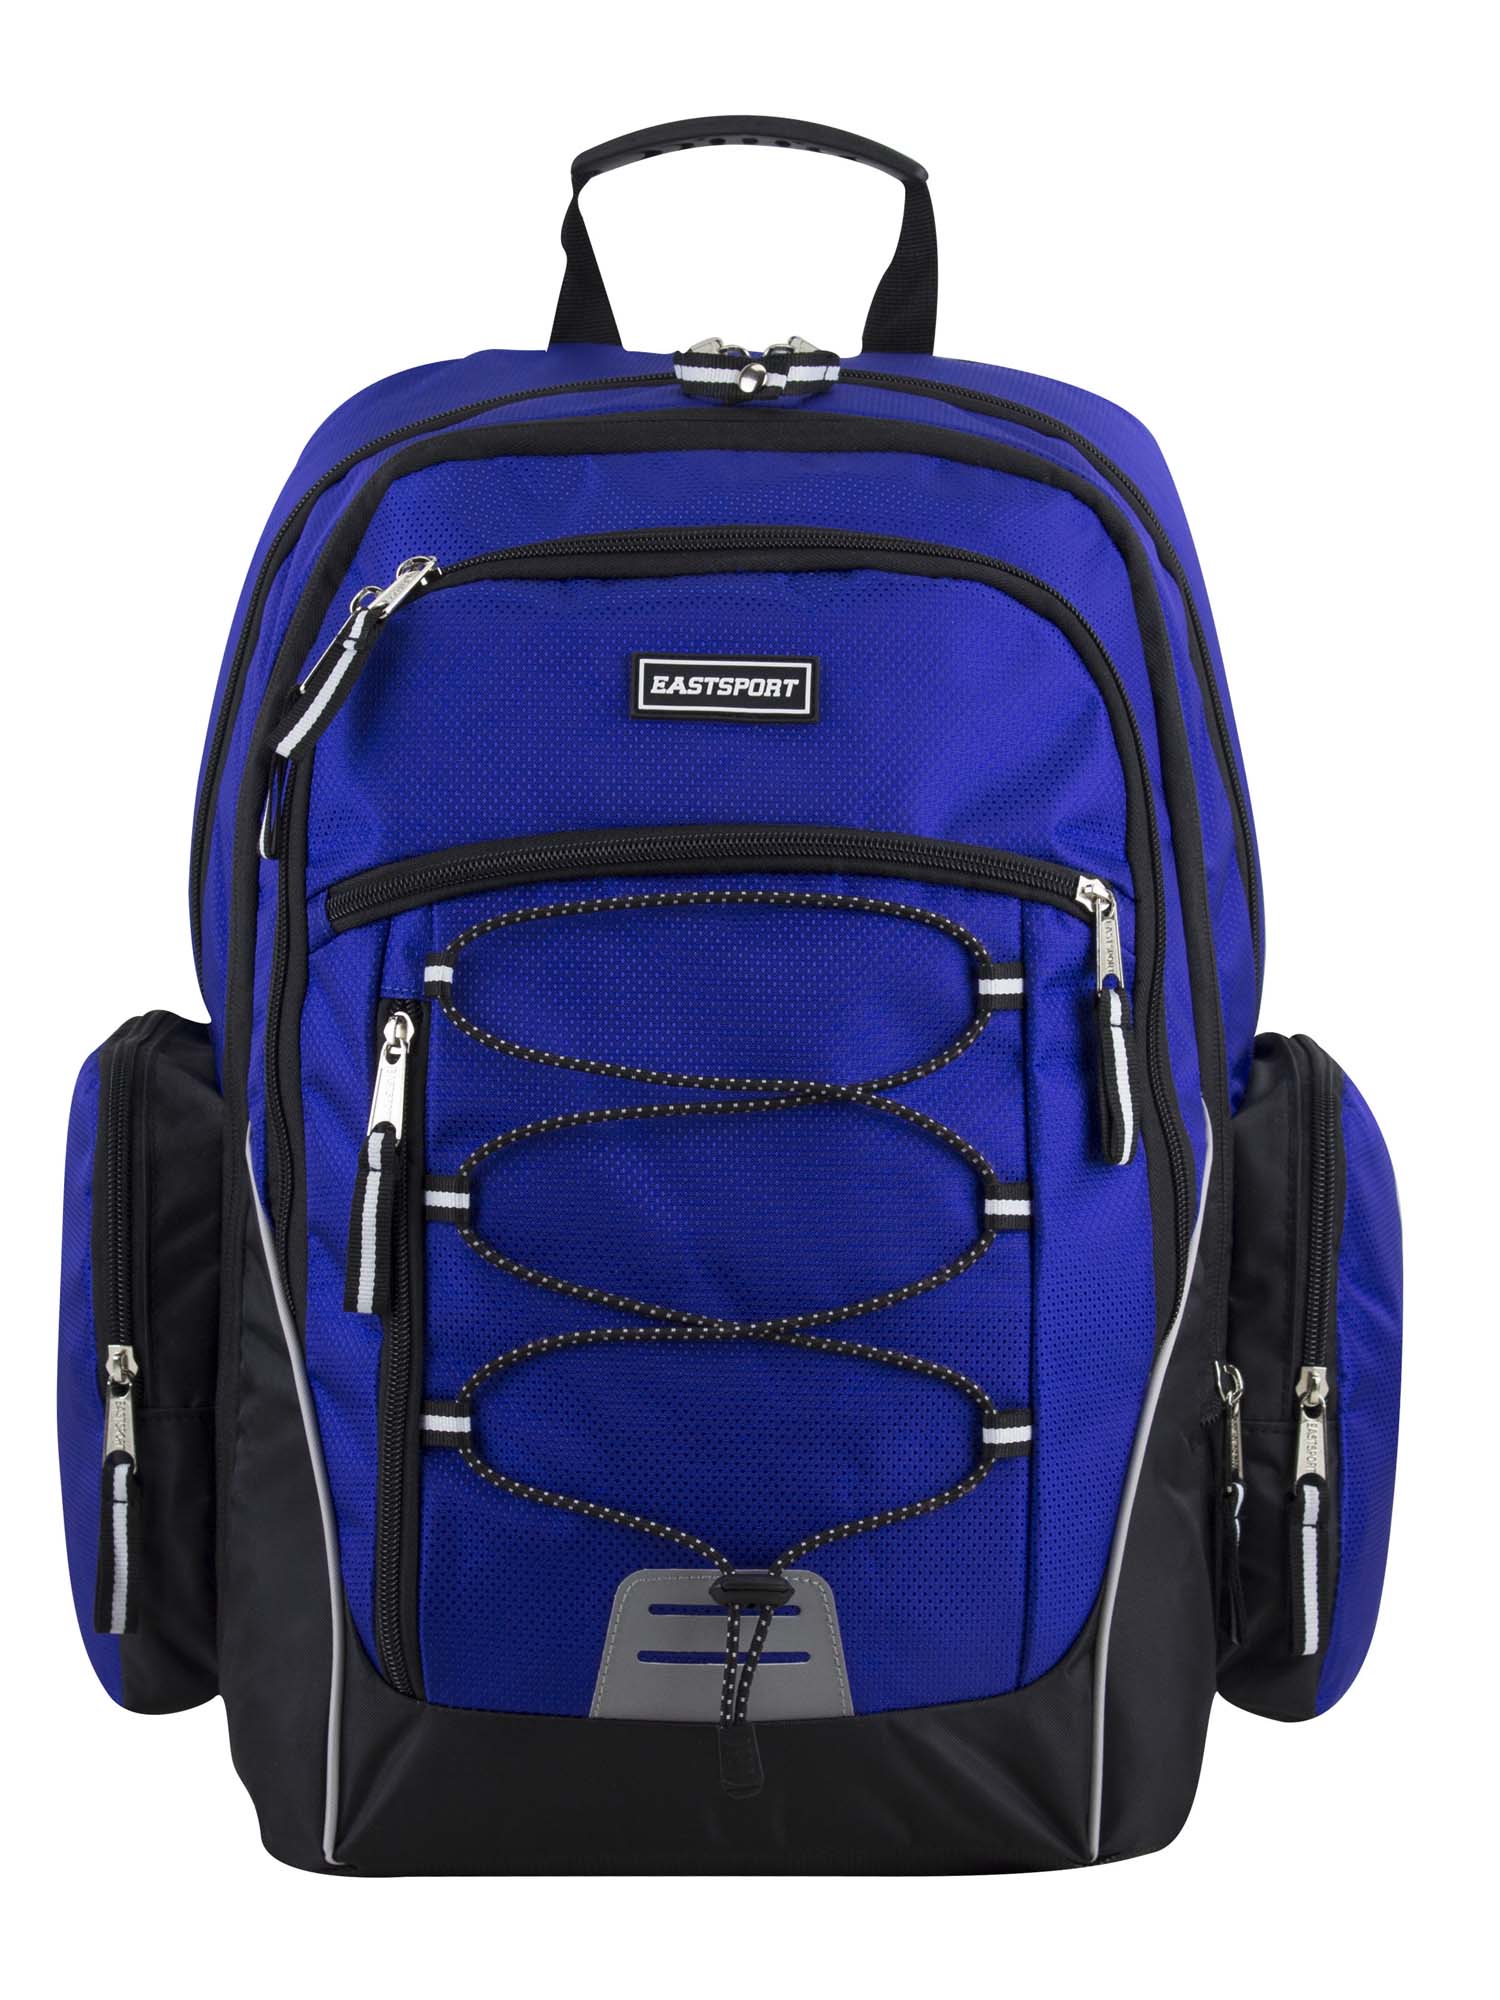 Eastsport Optimus Deep Sea Black Backpack - image 3 of 7